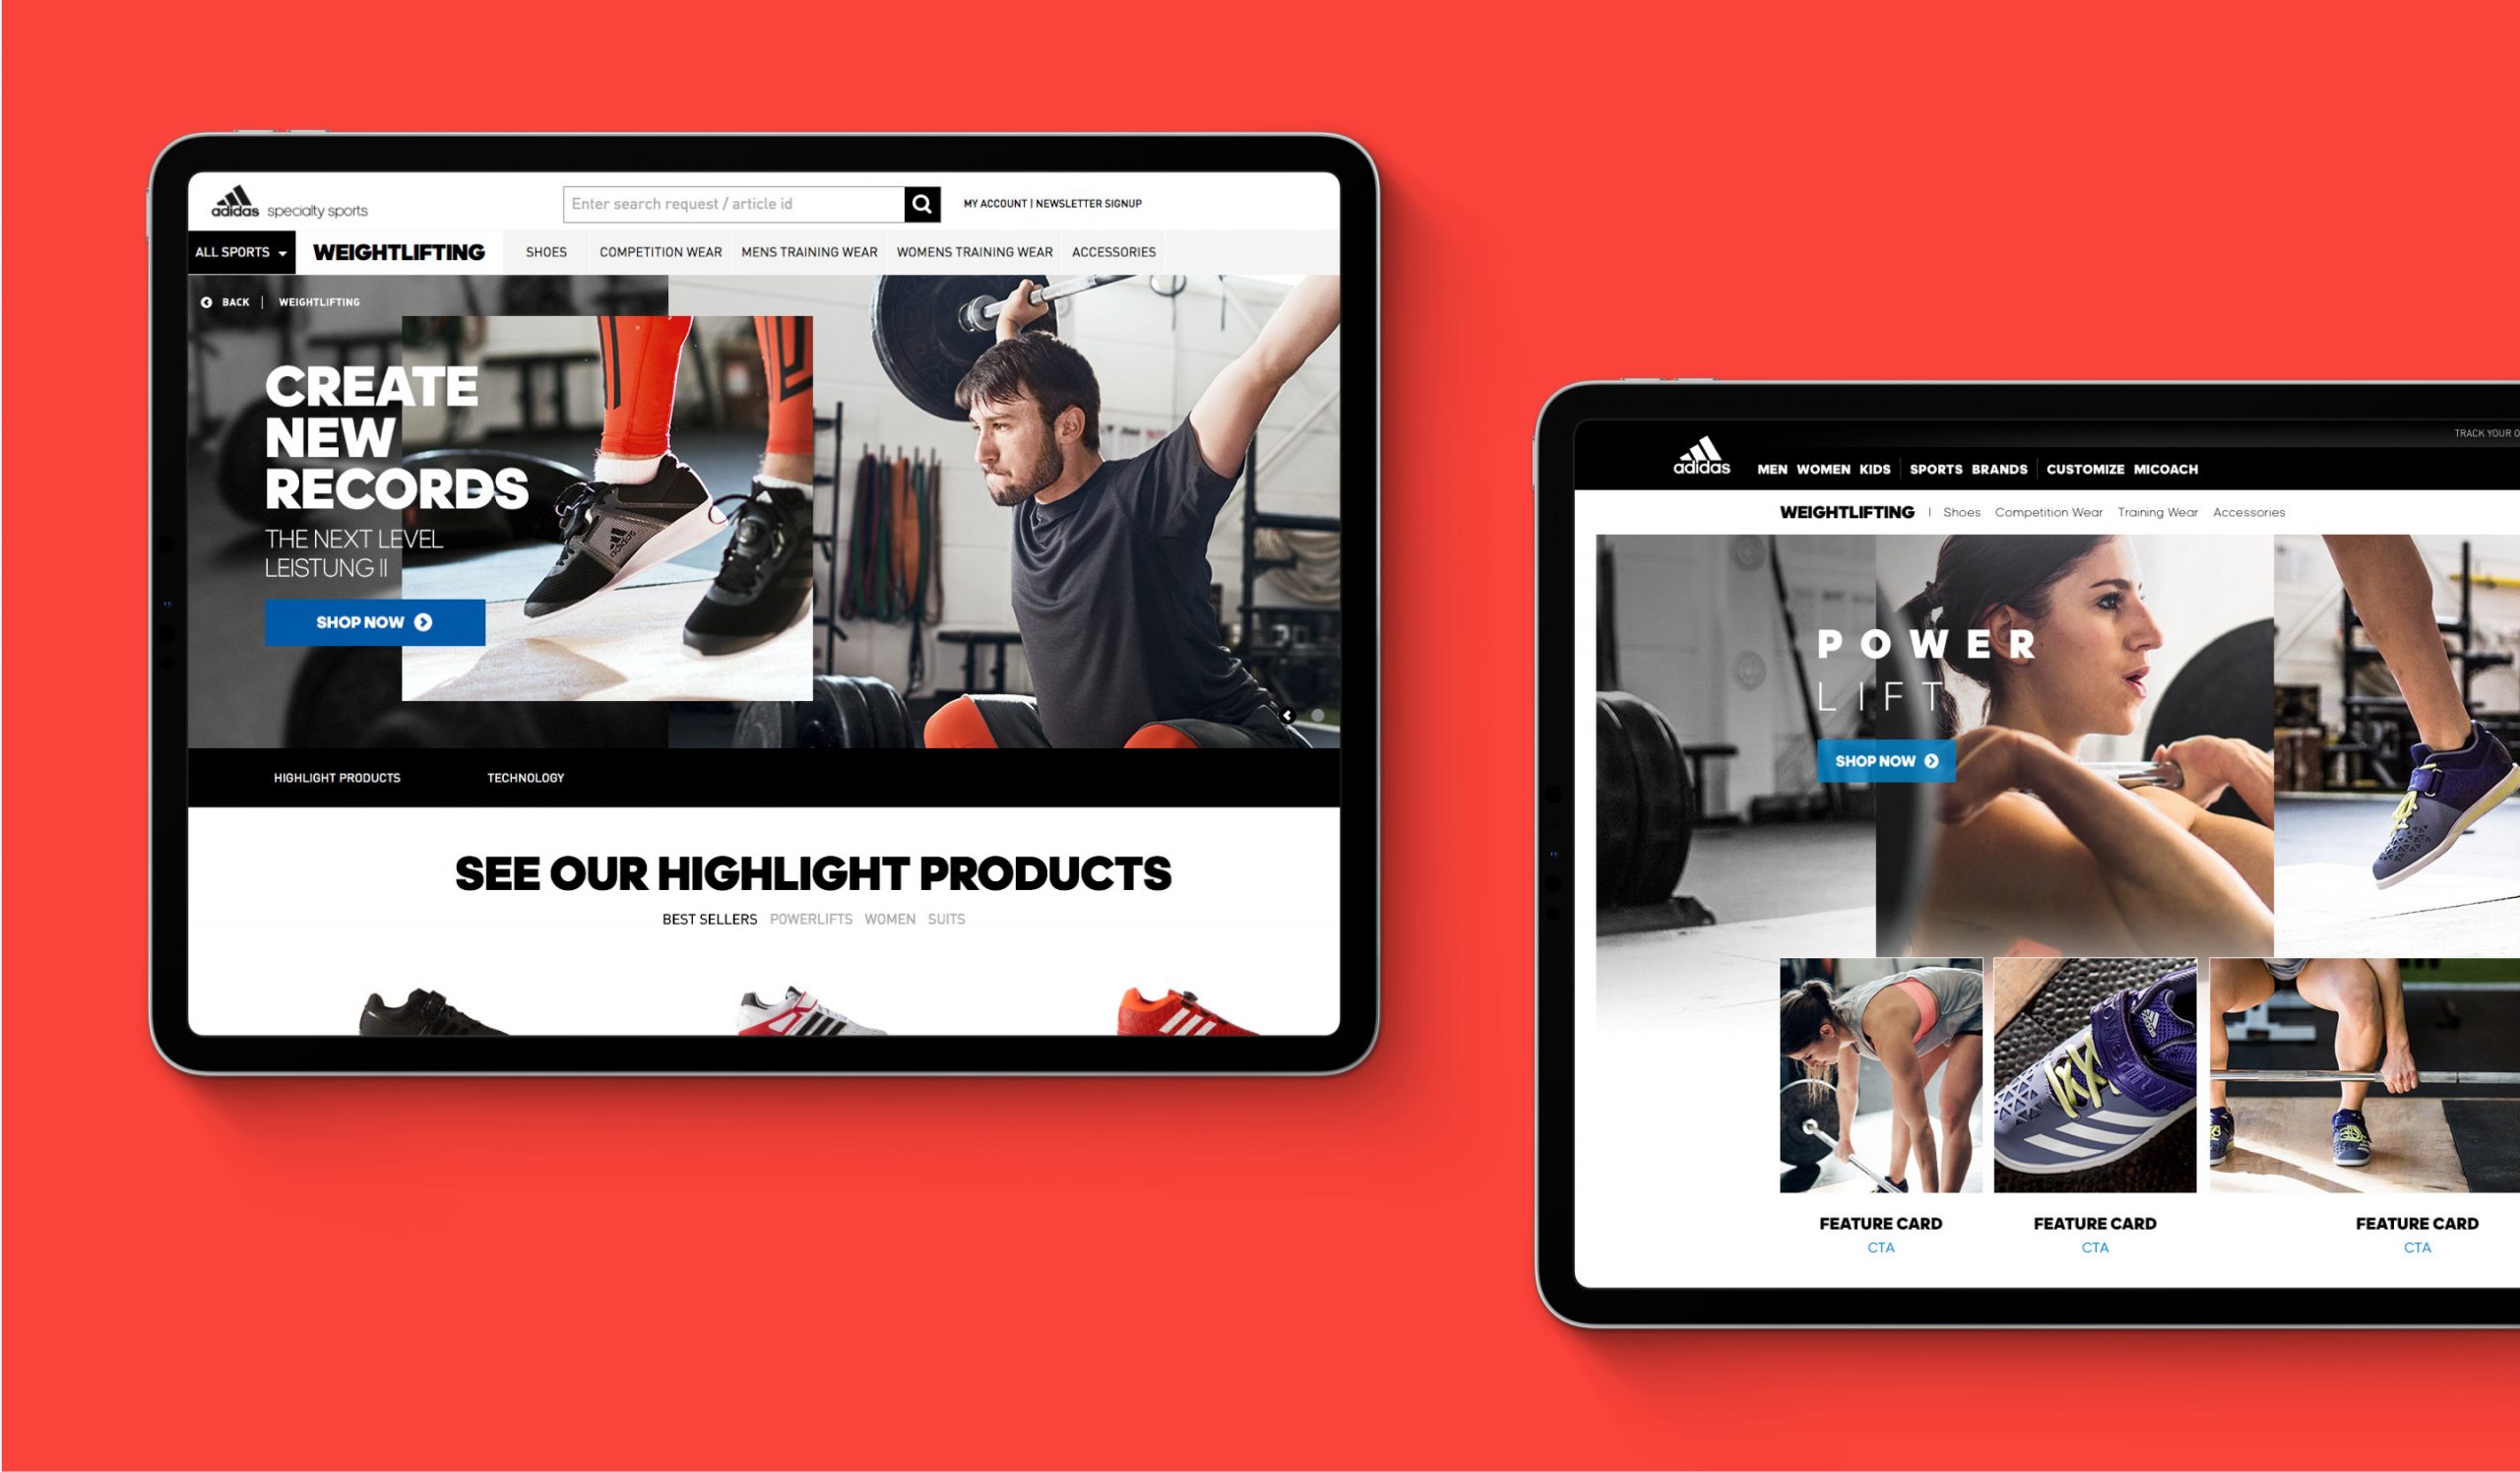 pascher-heinz-adidas-weightlifting-web